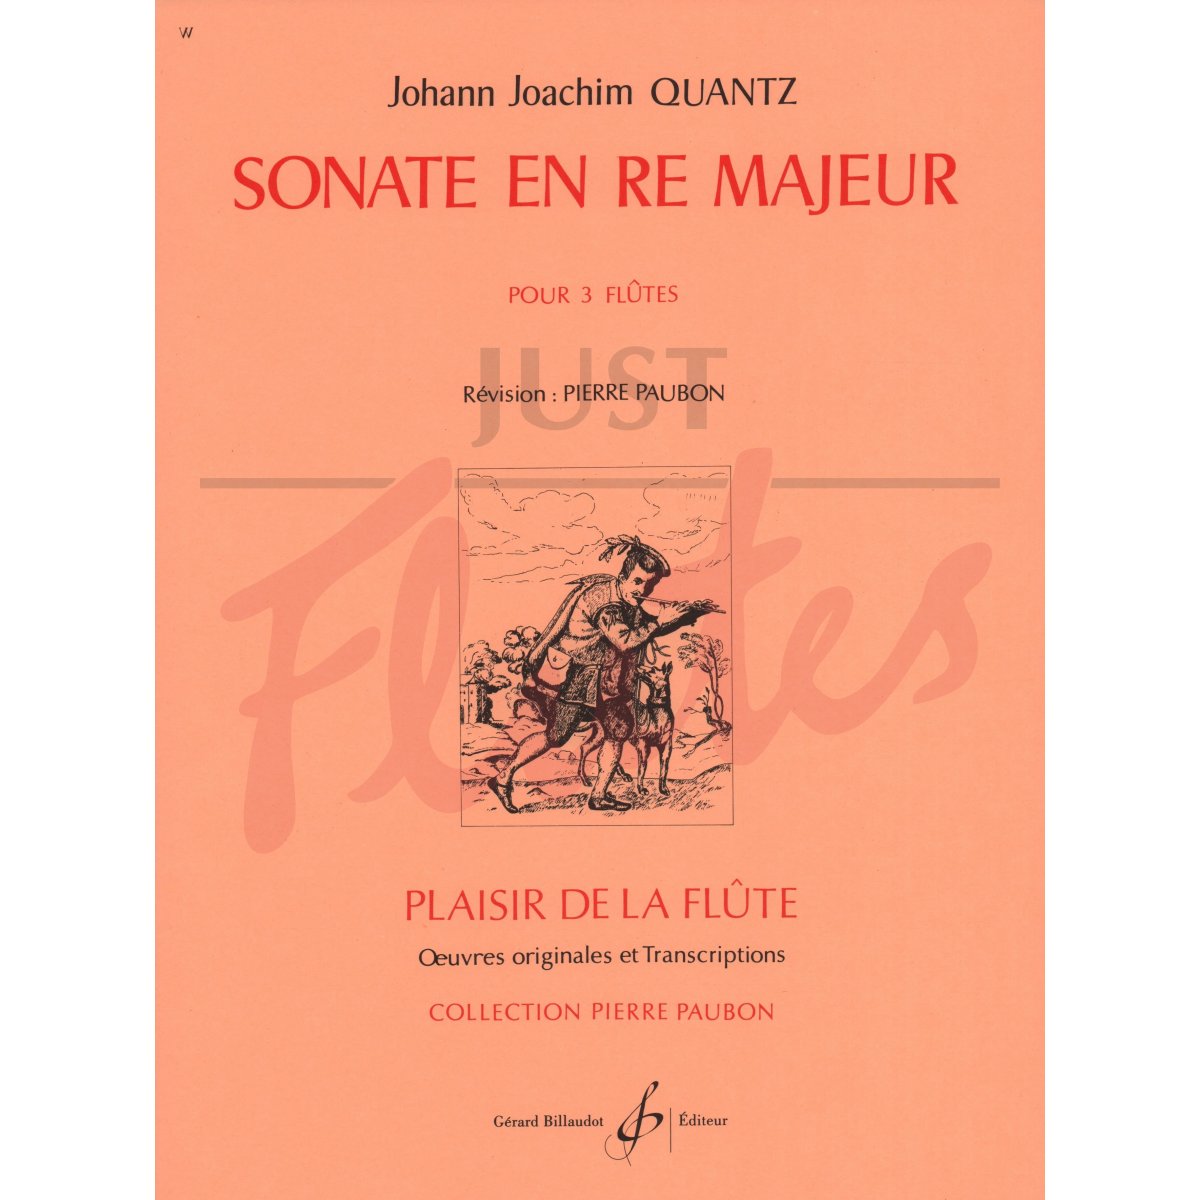 Sonata in D major for Three Flutes